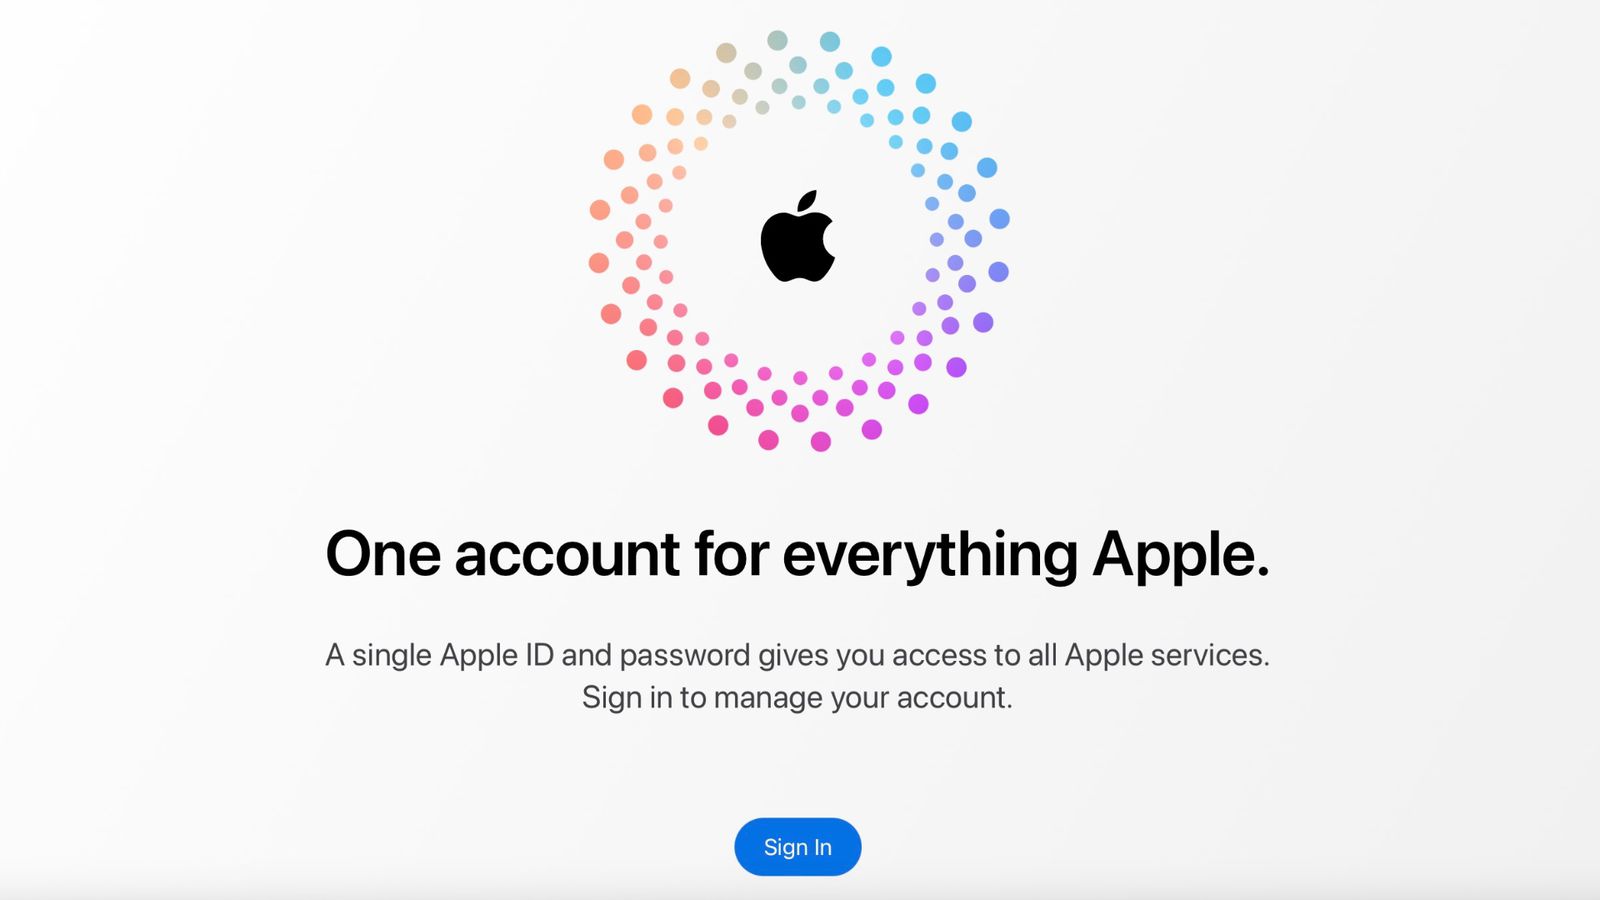 Dari iPhoneIslam.com, logo Apple dikelilingi oleh lingkaran titik berwarna di atas teks “Satu akun untuk semua Apple”, dengan tombol “Masuk” di bawah, ditampilkan di Margin News